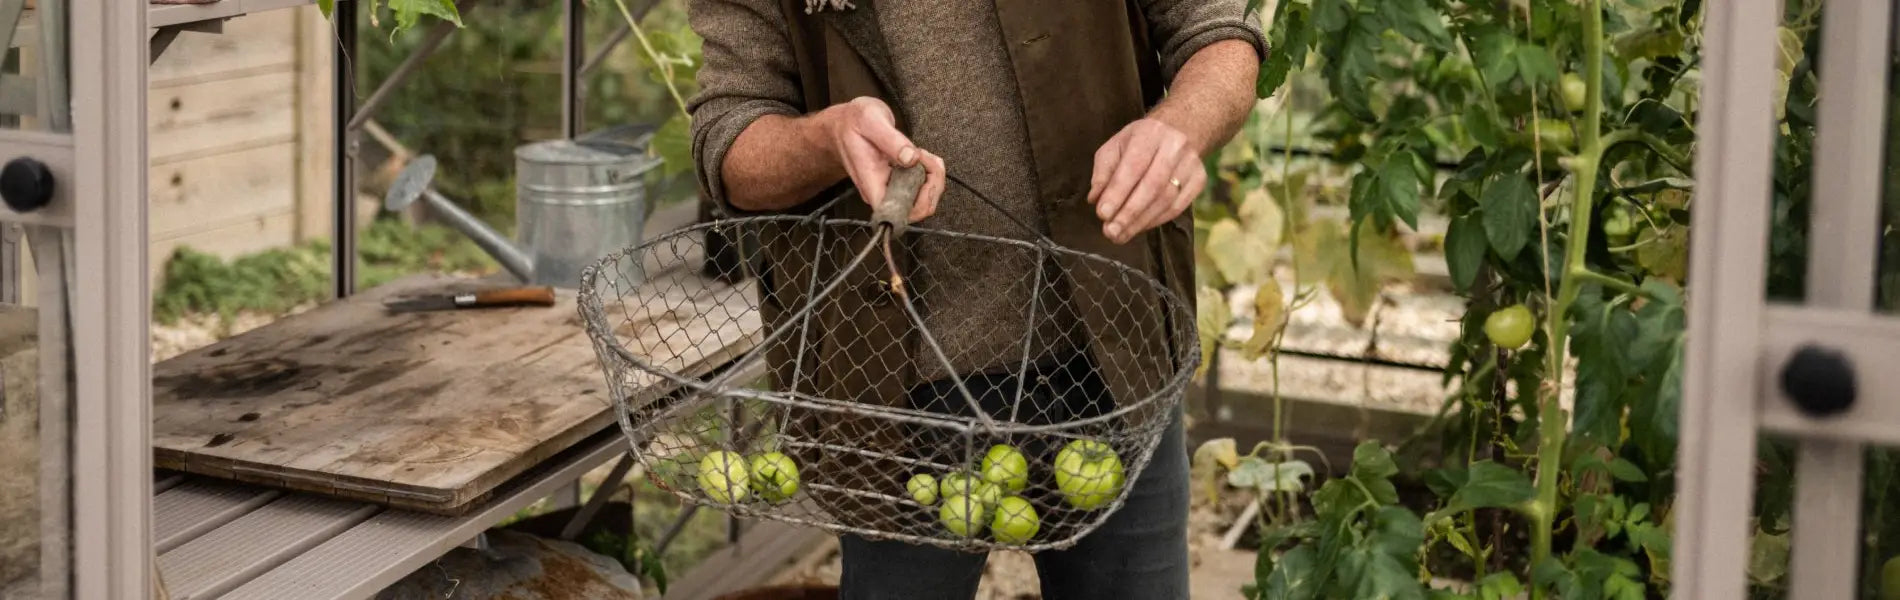 Gentleman harvesting vegetables from his greenhouse